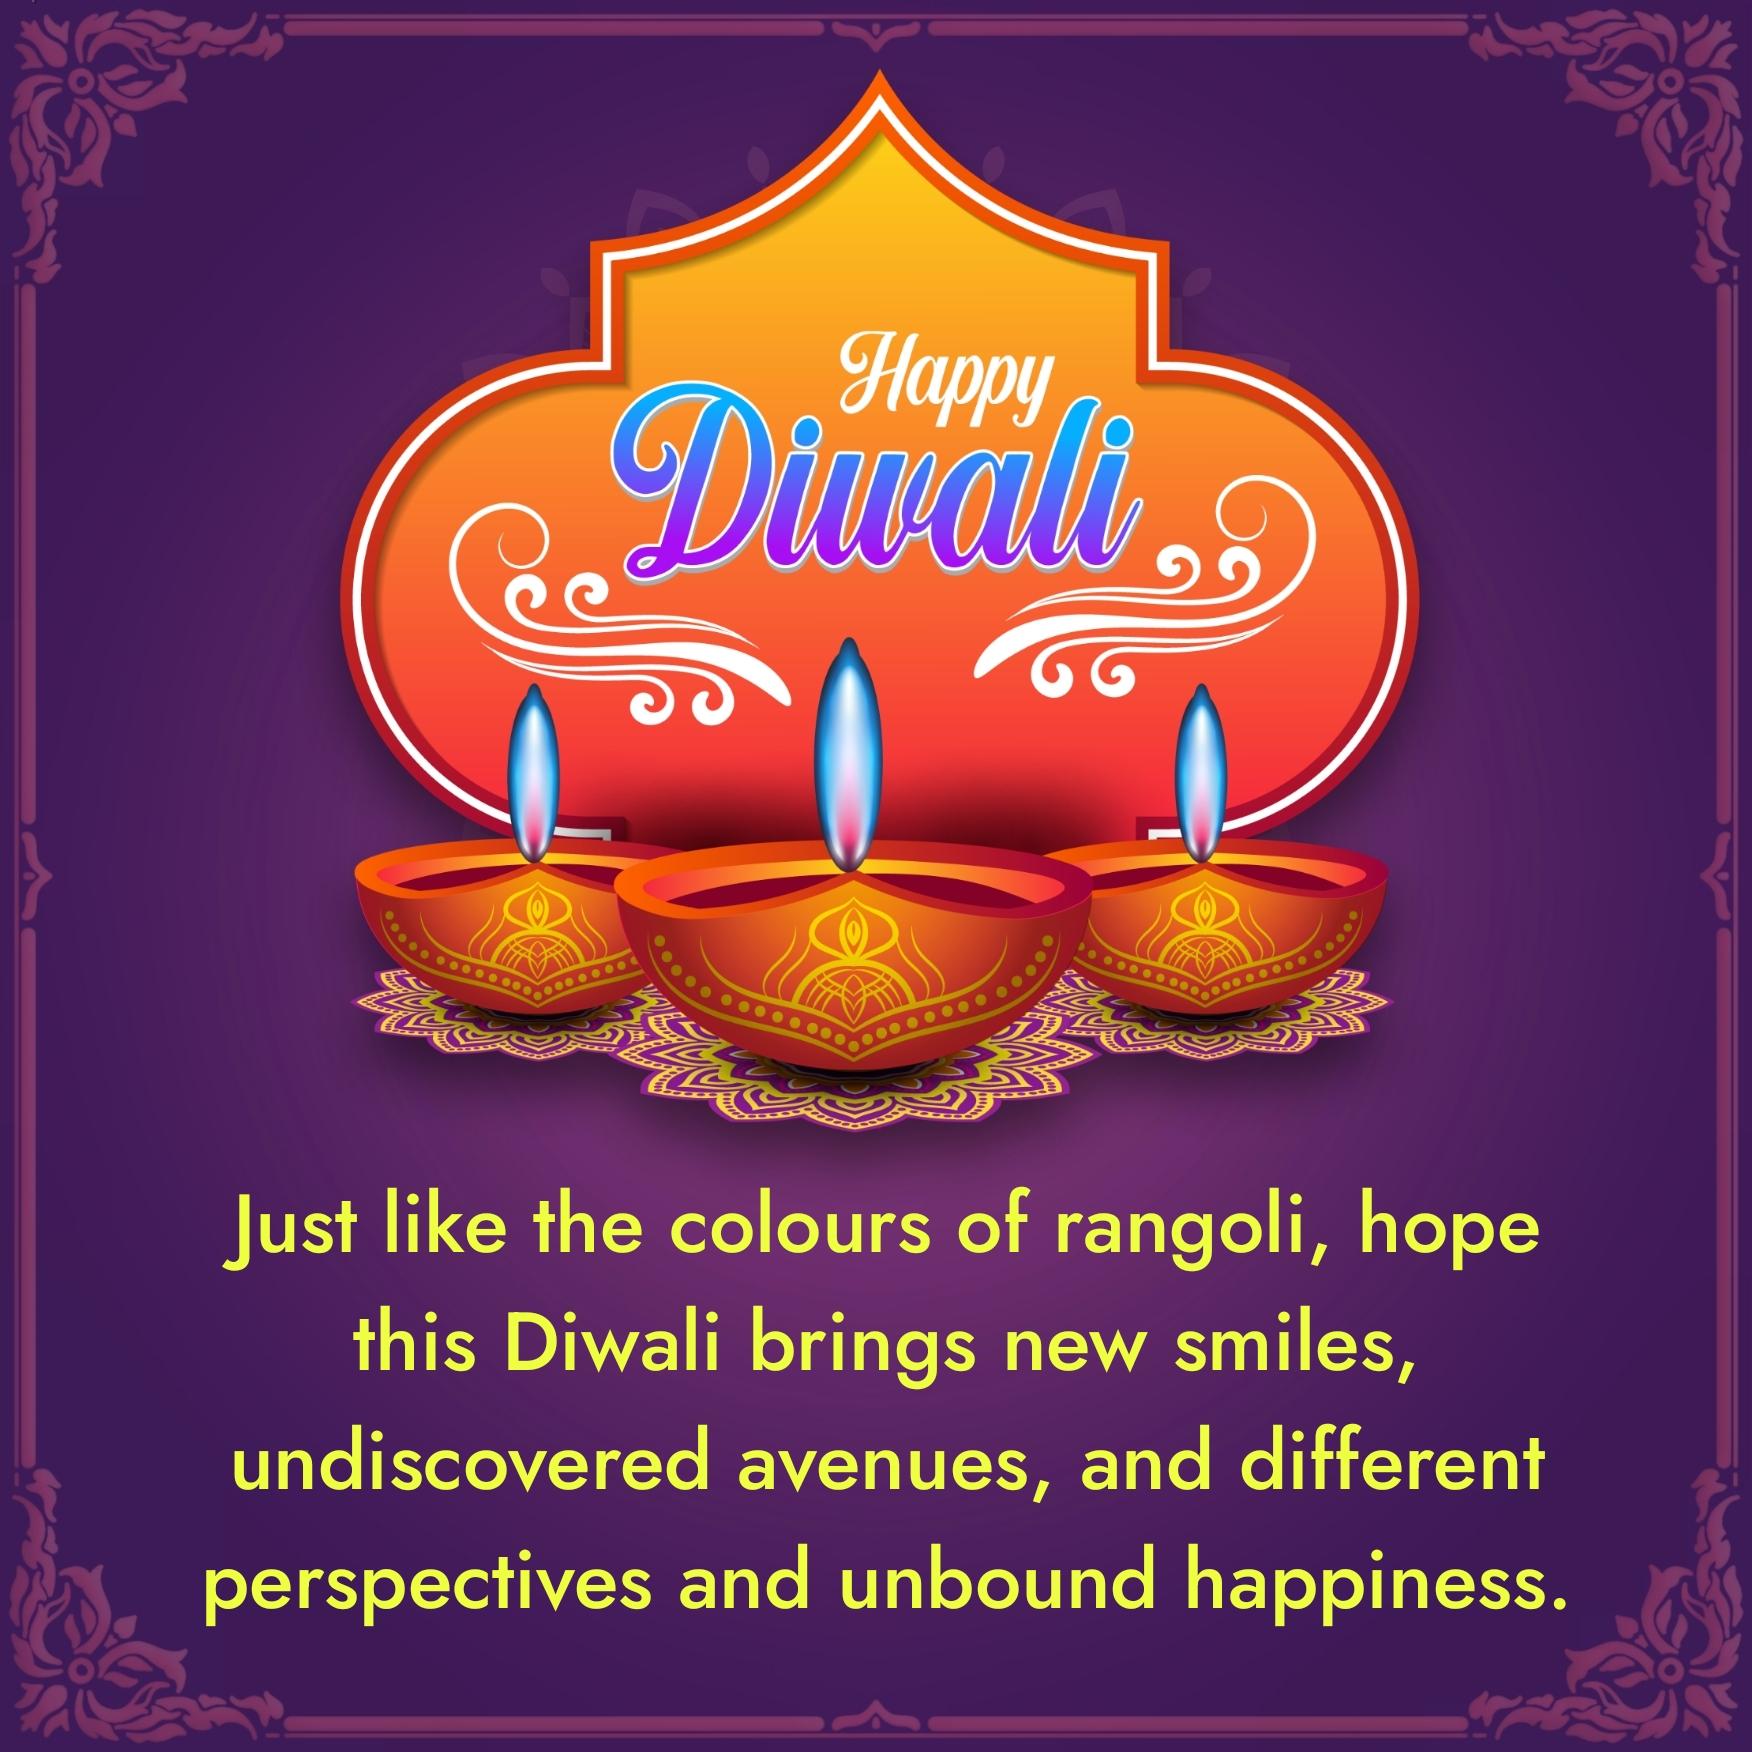 Just like the colours of rangoli hope this Diwali brings